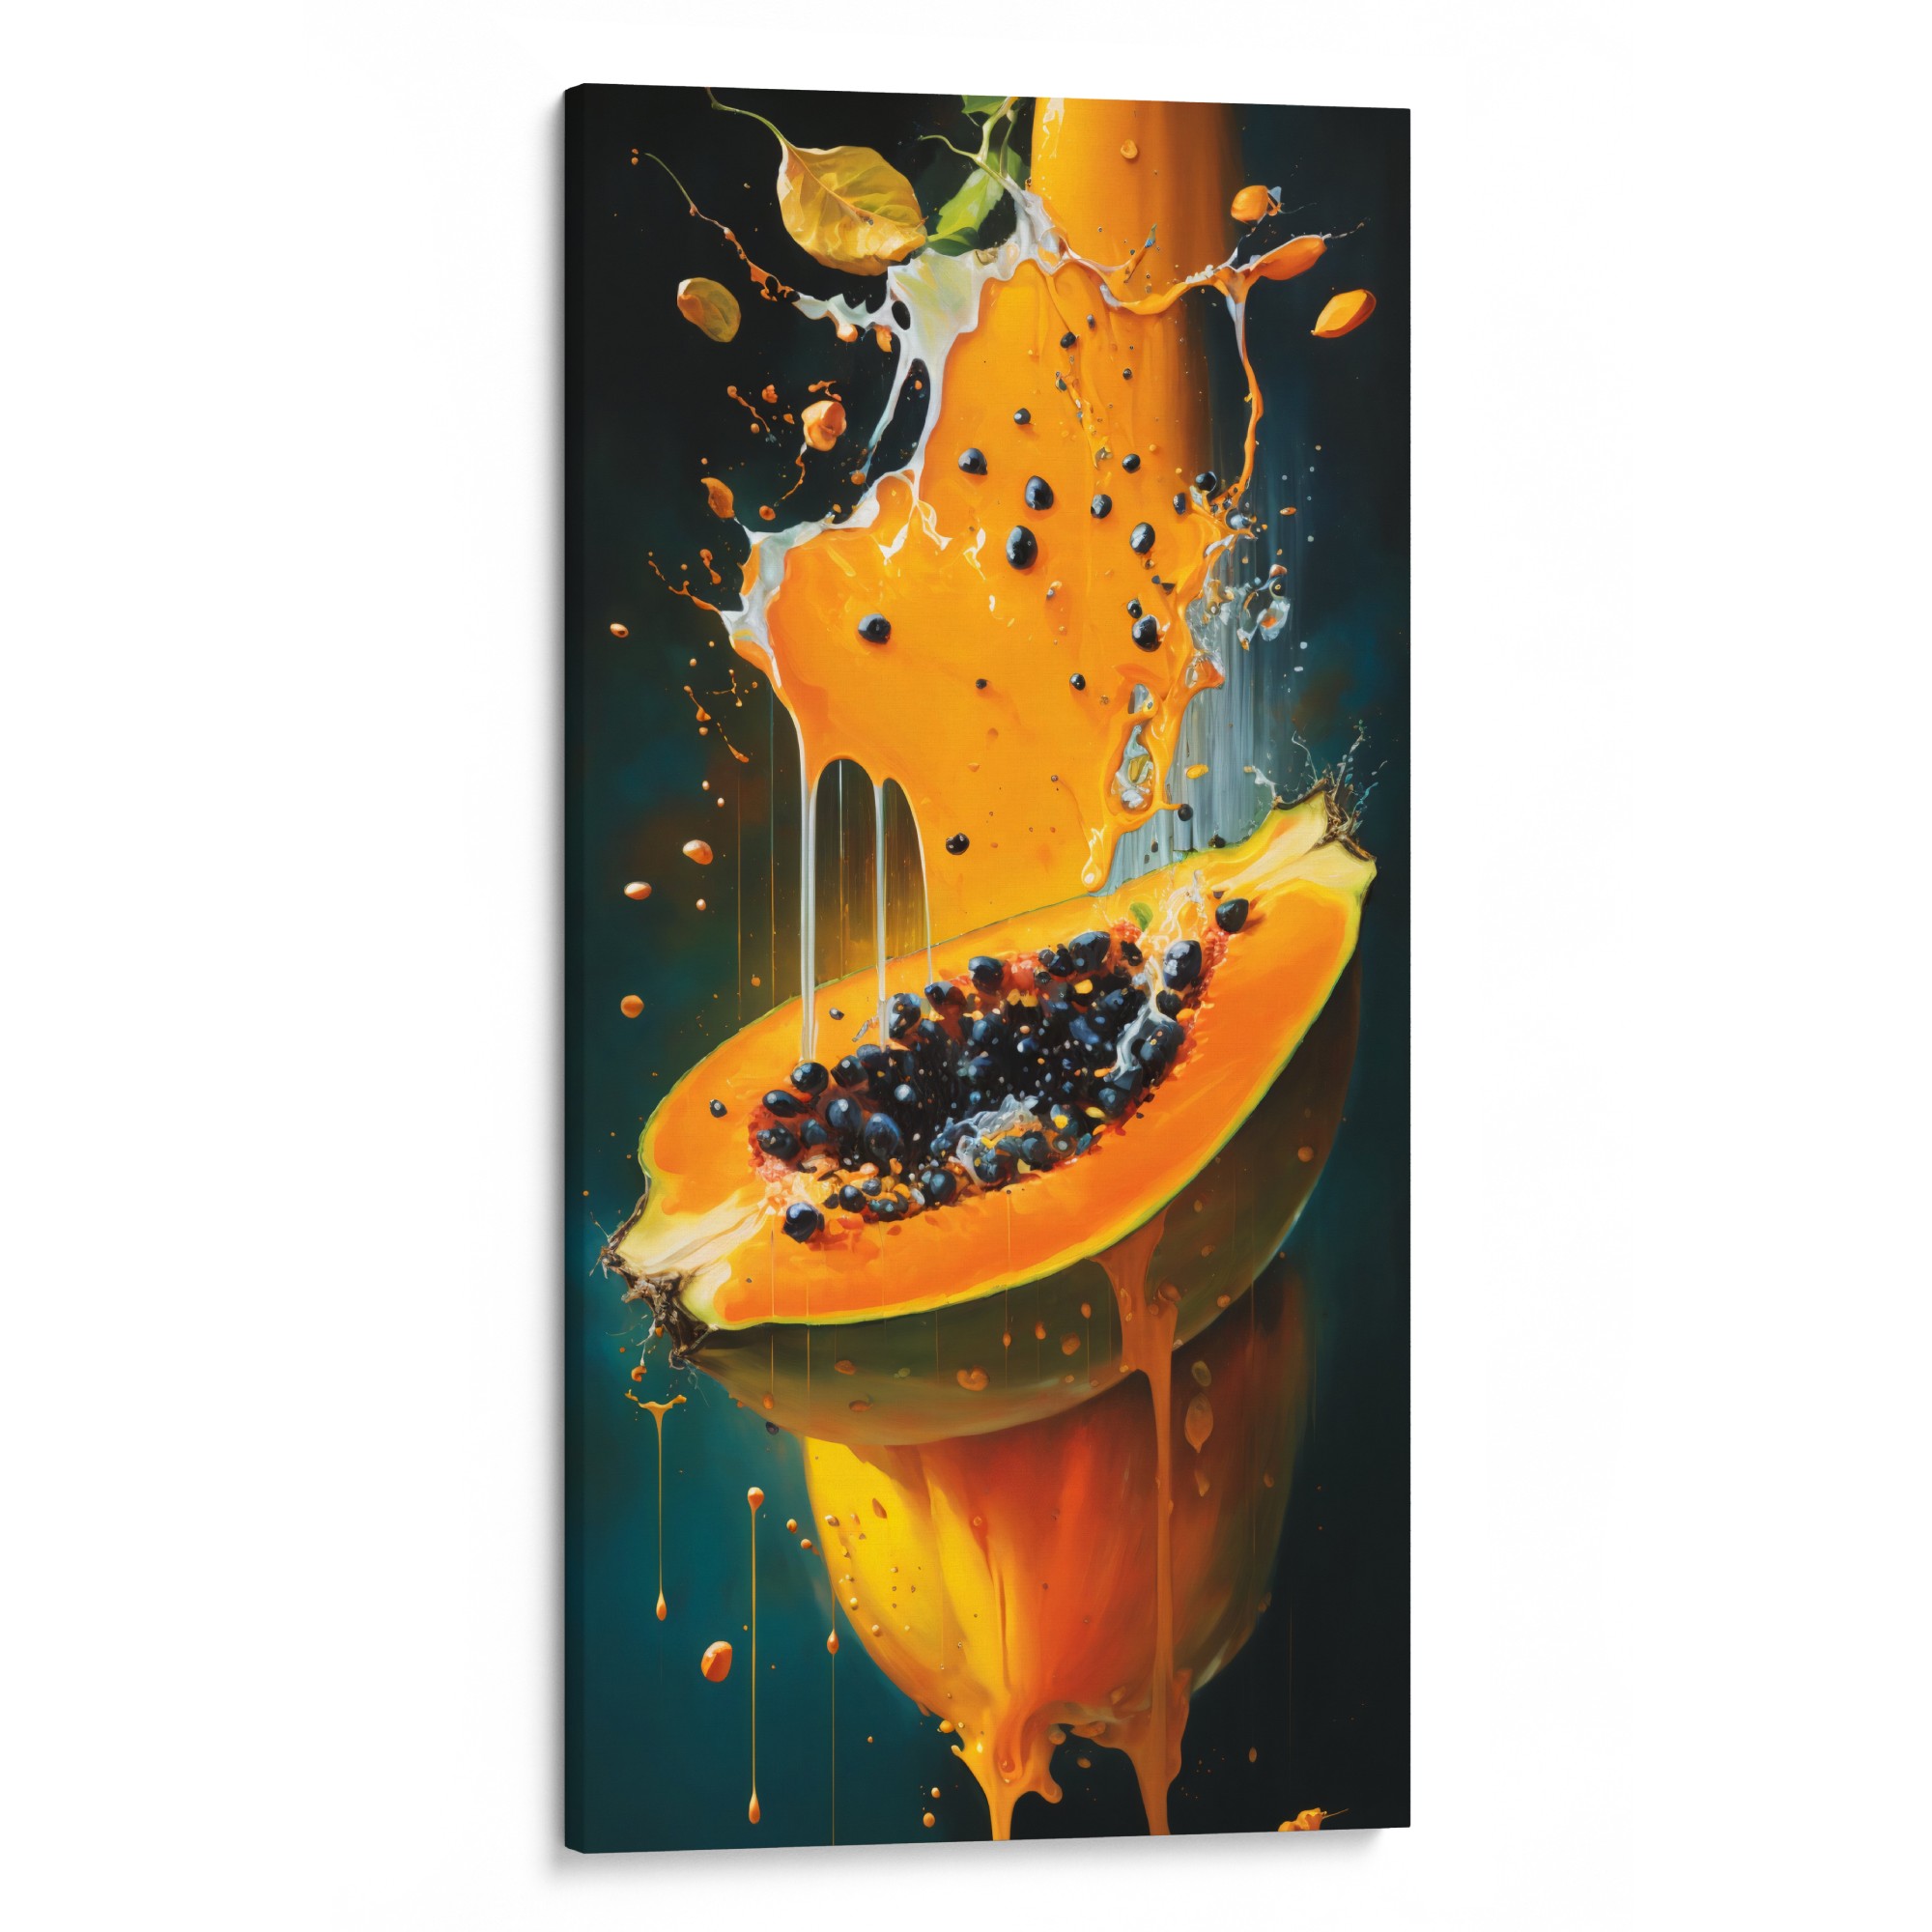 PAPAYA PULSE Bespoke Canvas - A burst of tropical colors for art enthusiasts.